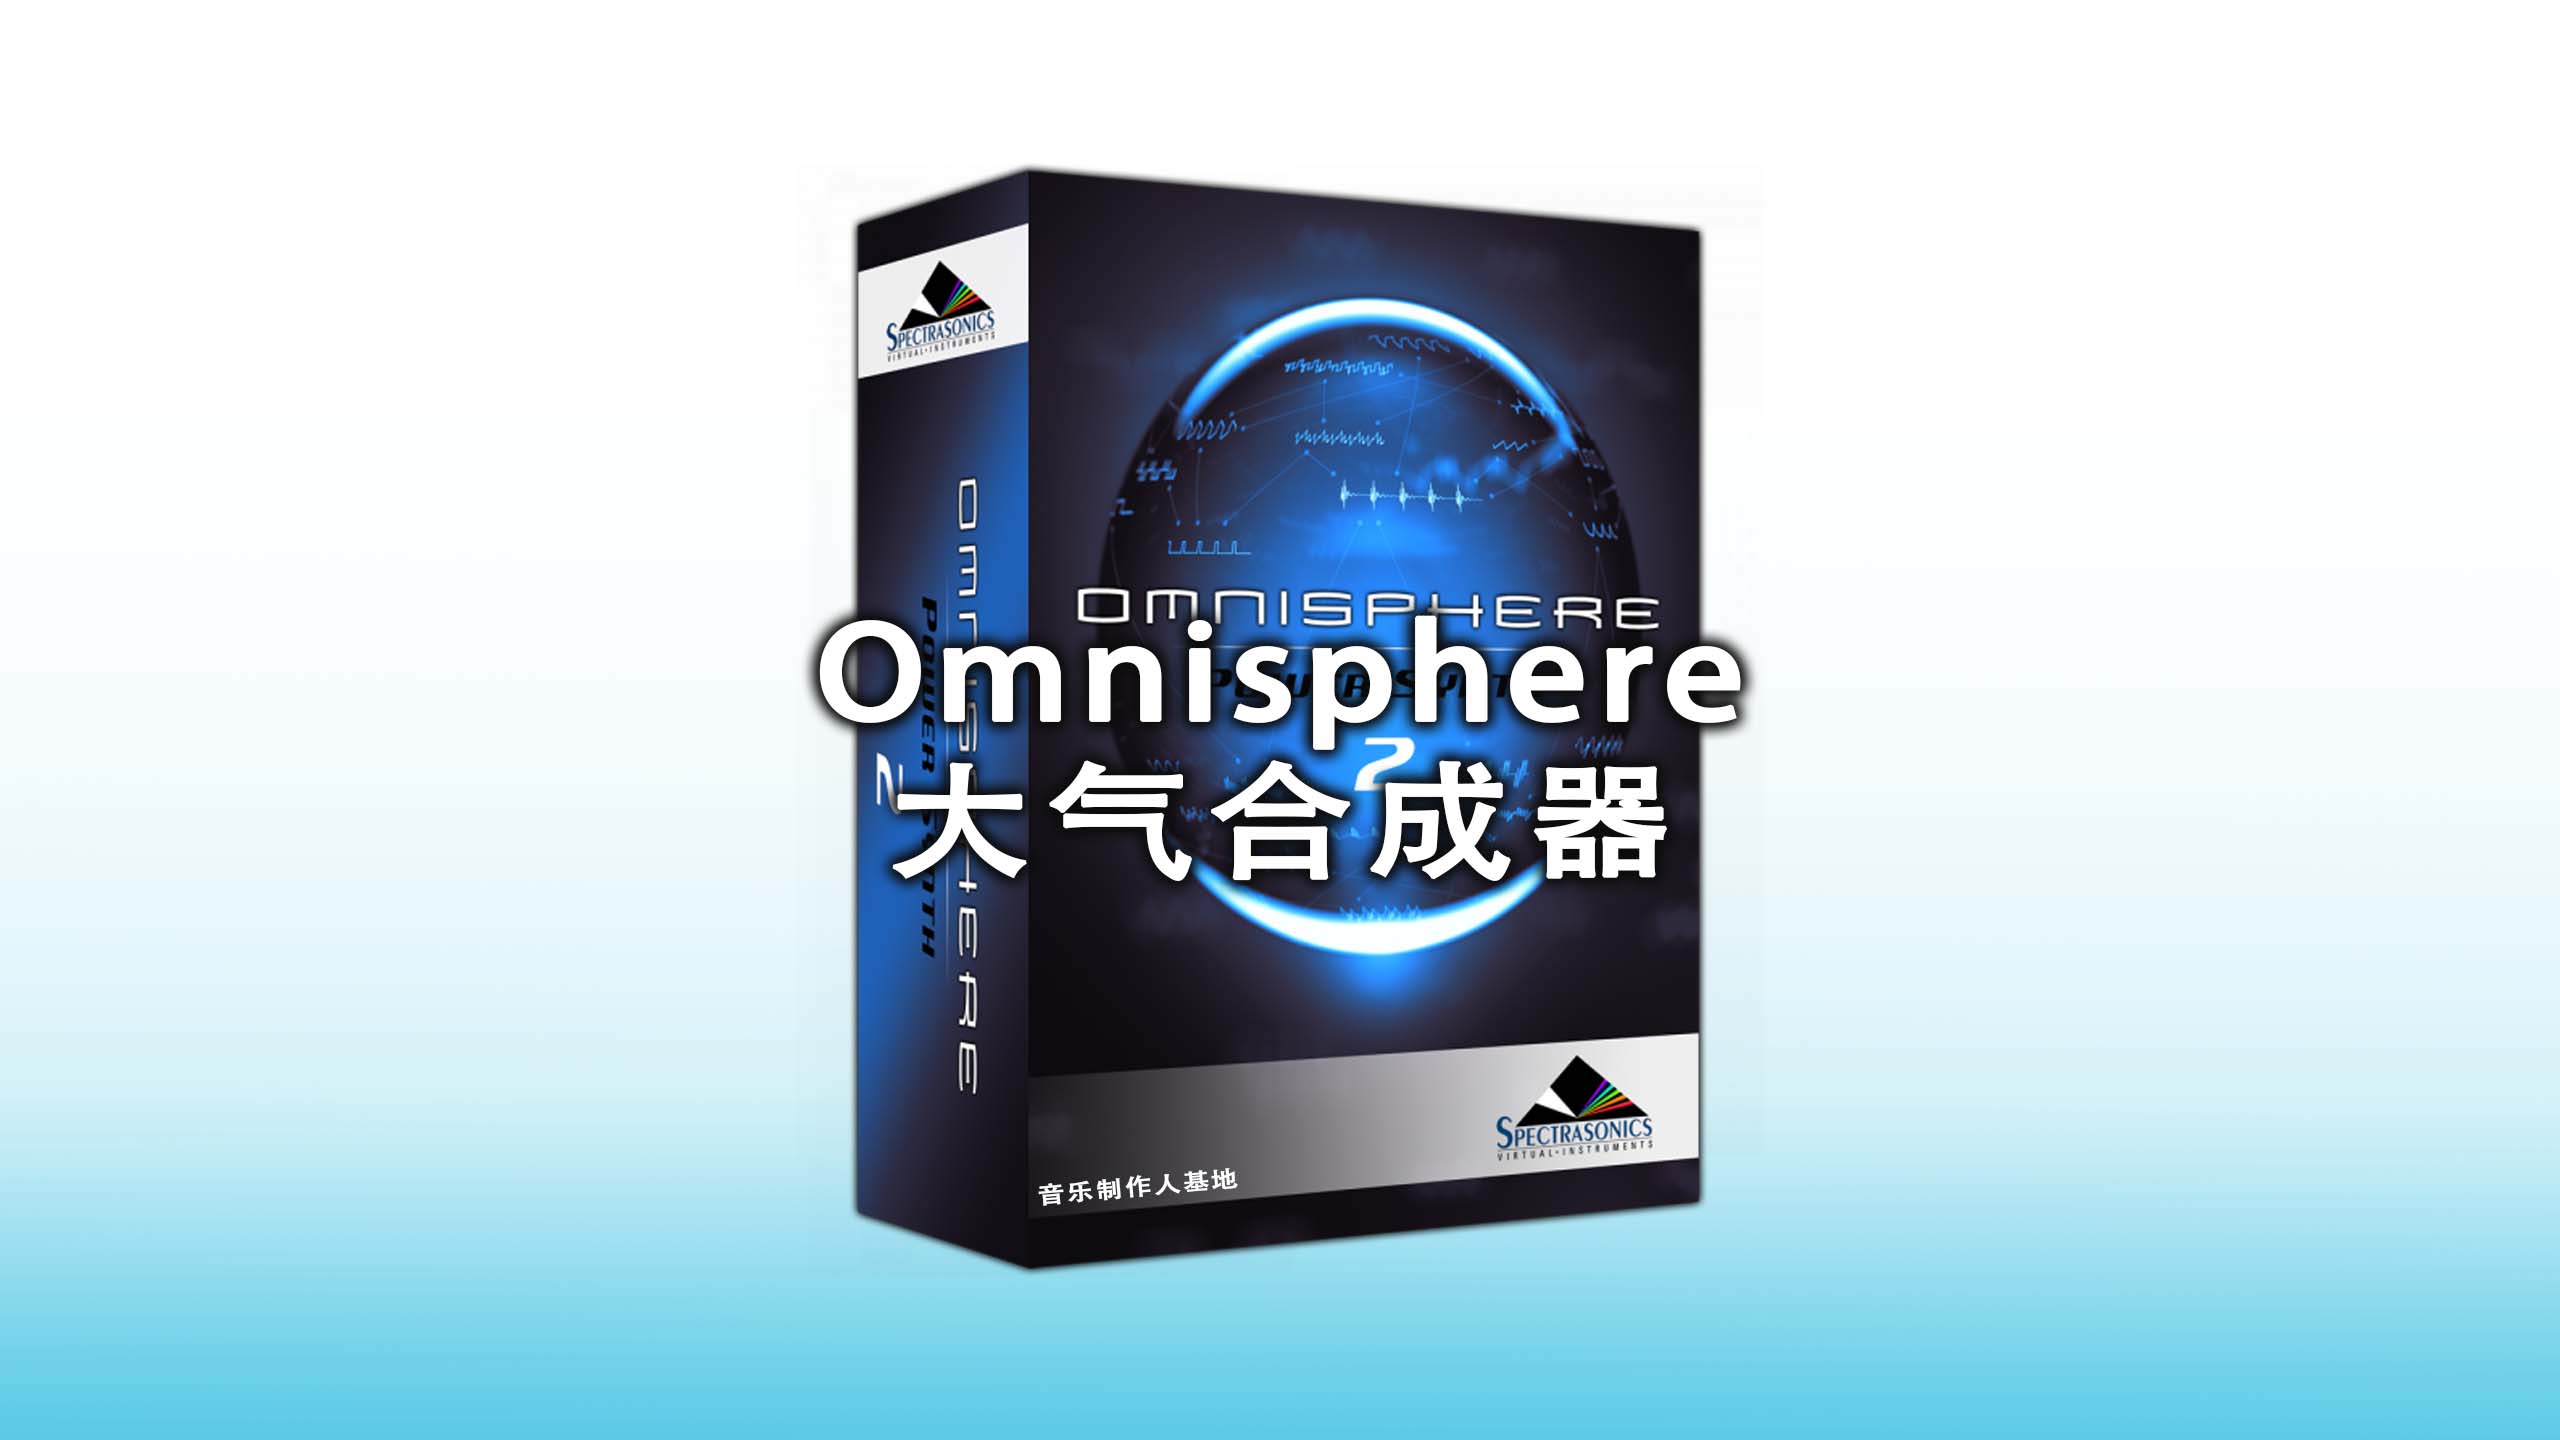 Omnisphere大气合成器完整音色库版！最新版大气合成器Omnisphere.v2.8.5e.Windows完整版